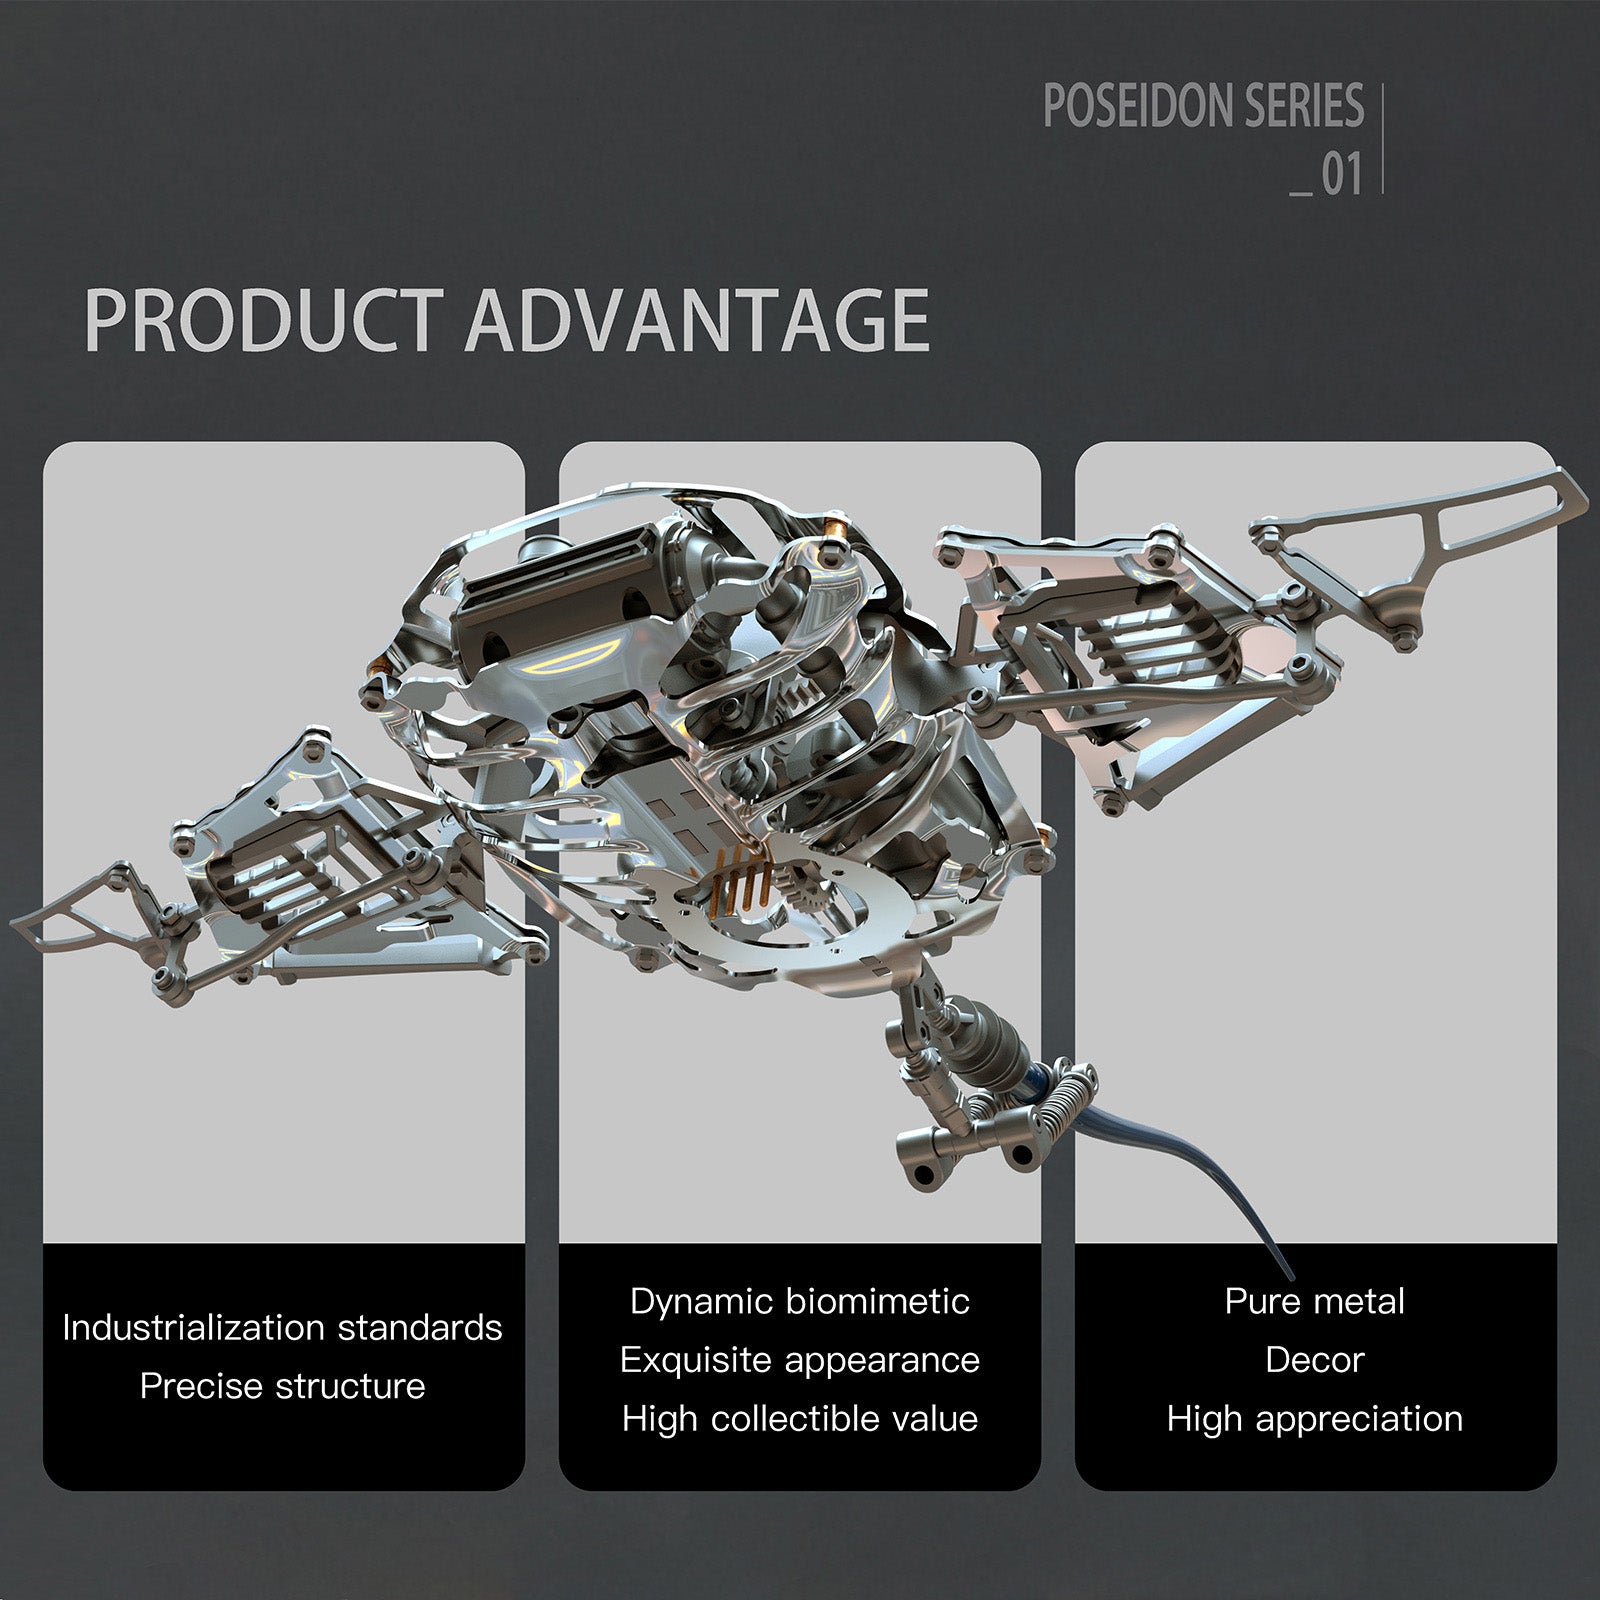 Steampunk Mobula Manta Ray Mechanical 3D Metal Model Building Kits 200+PCS - stirlingkit